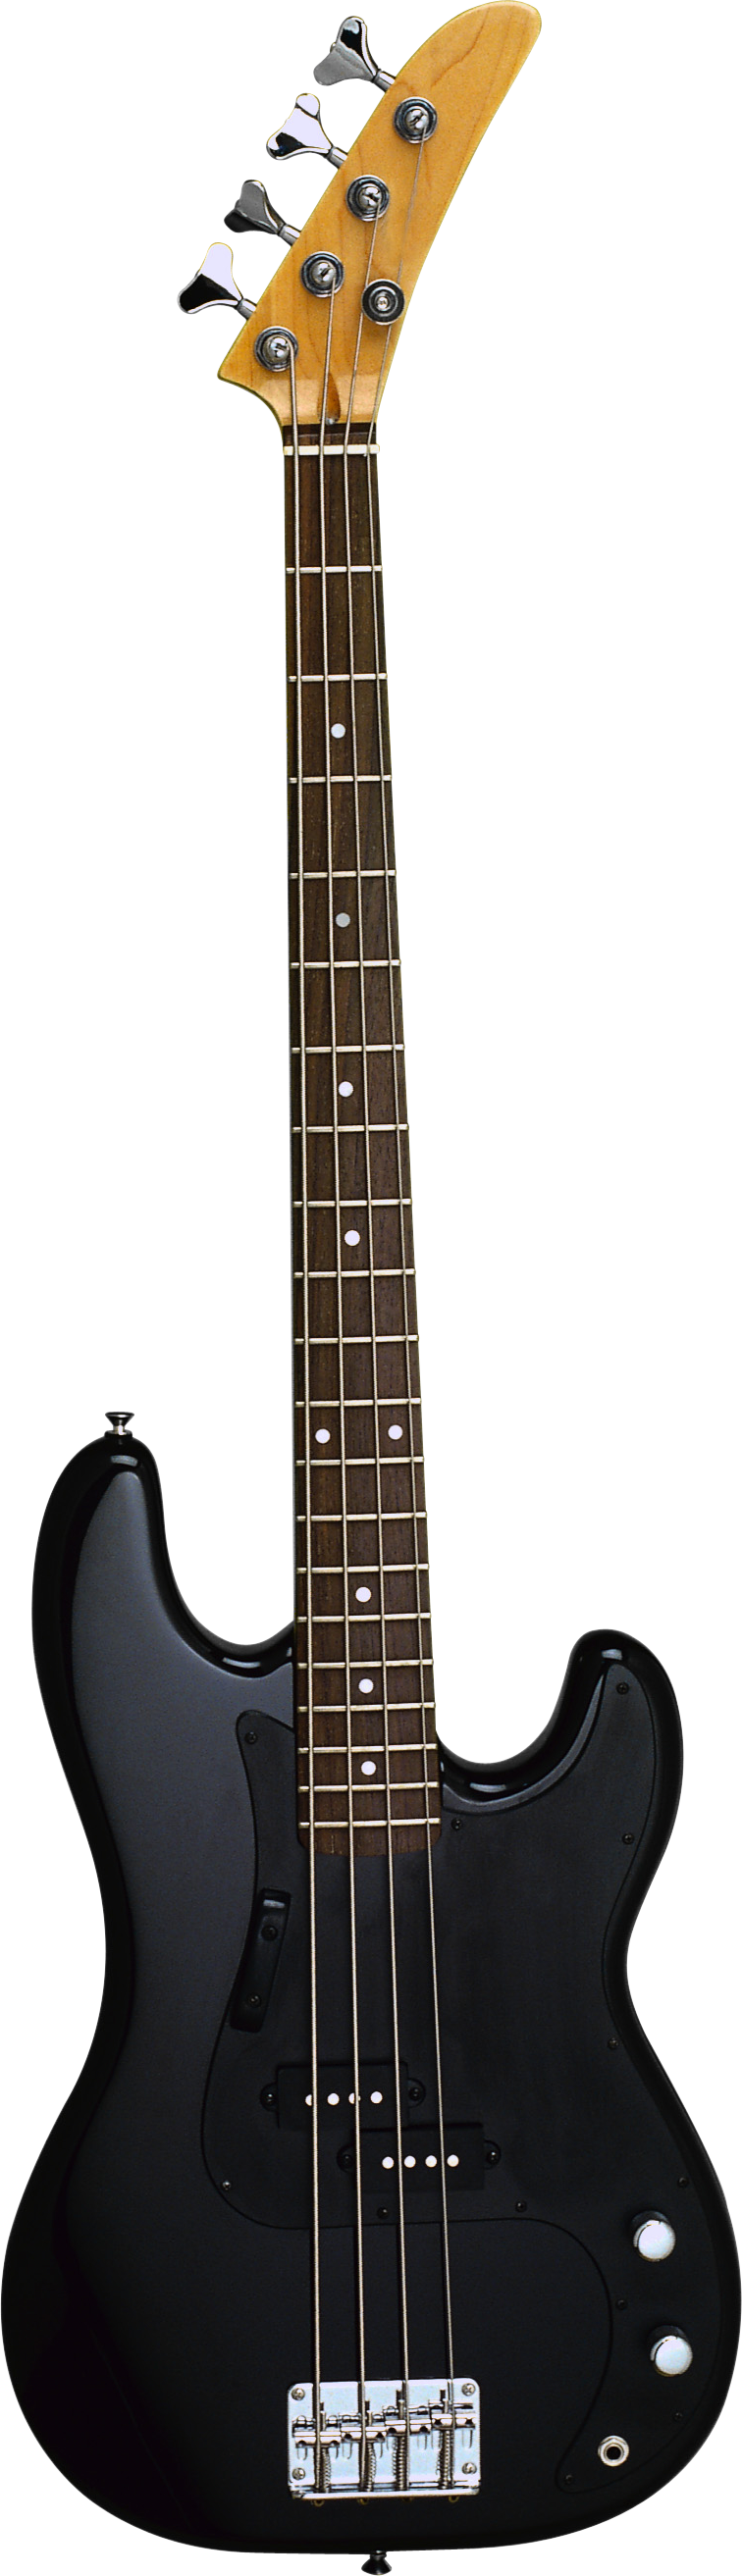 Guitarra elétrica preta